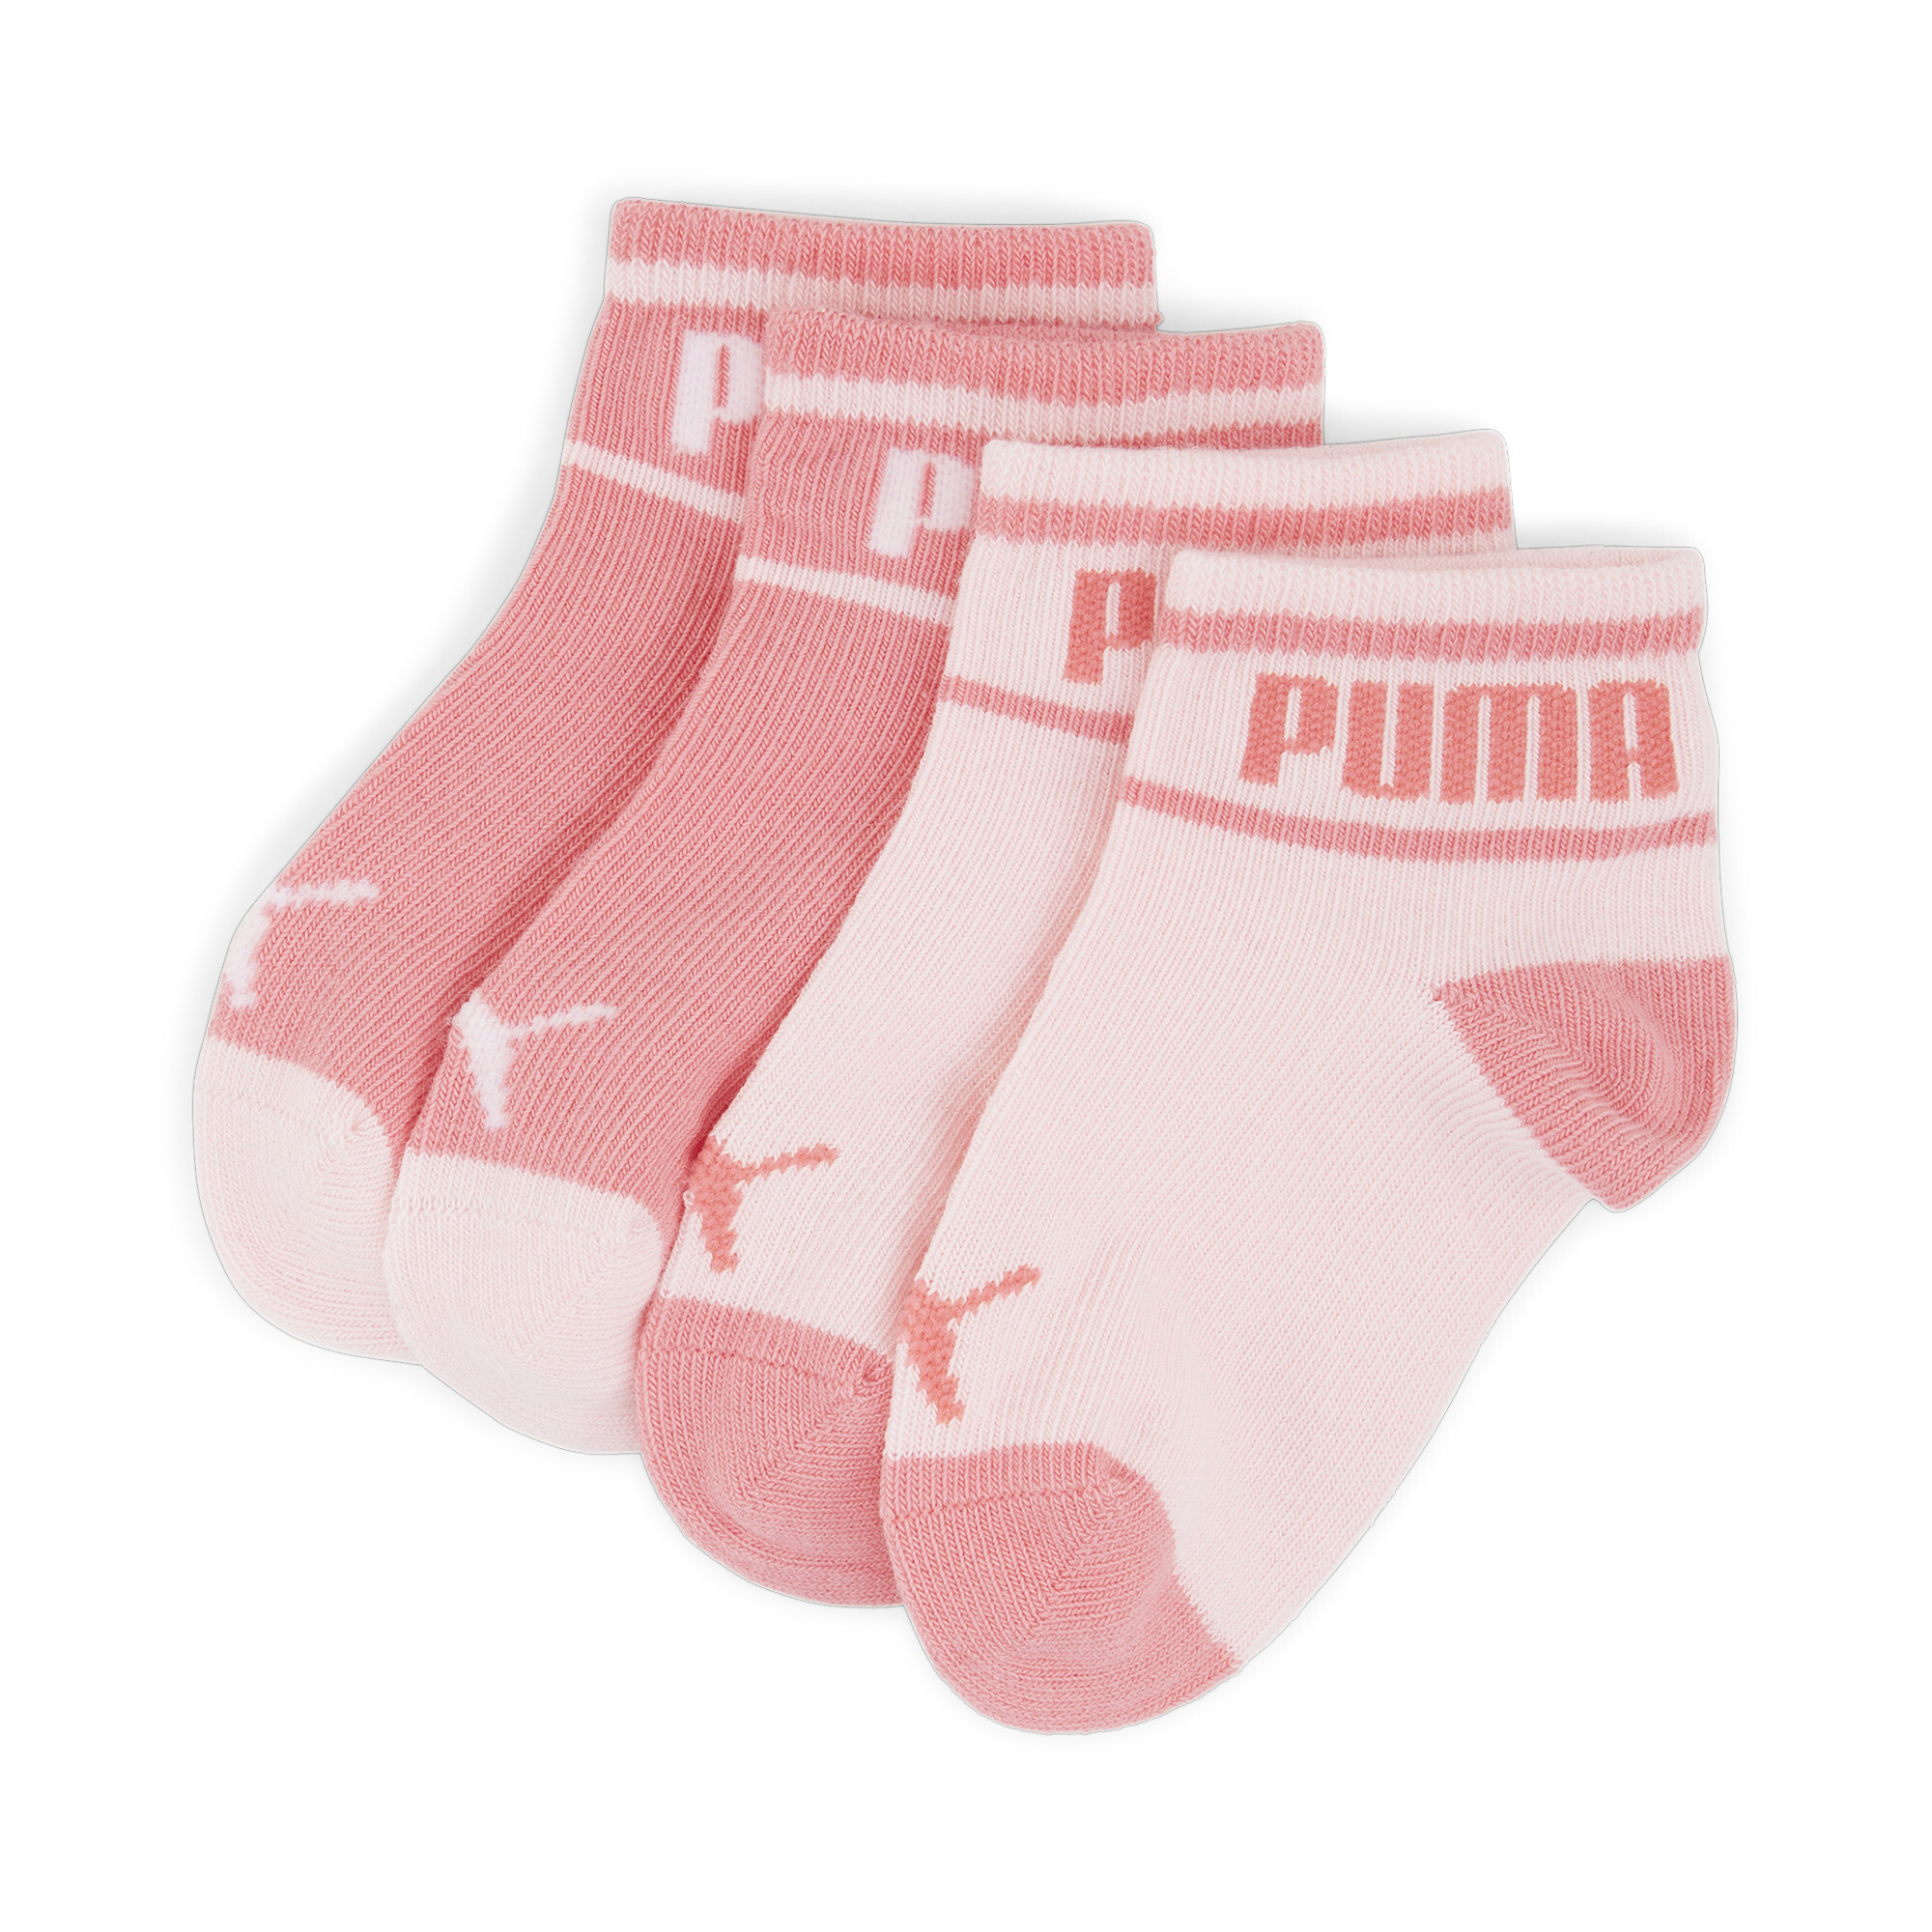 Puma Baby Word Lifestyle Socks 2 Pack, Size 19-22, Age